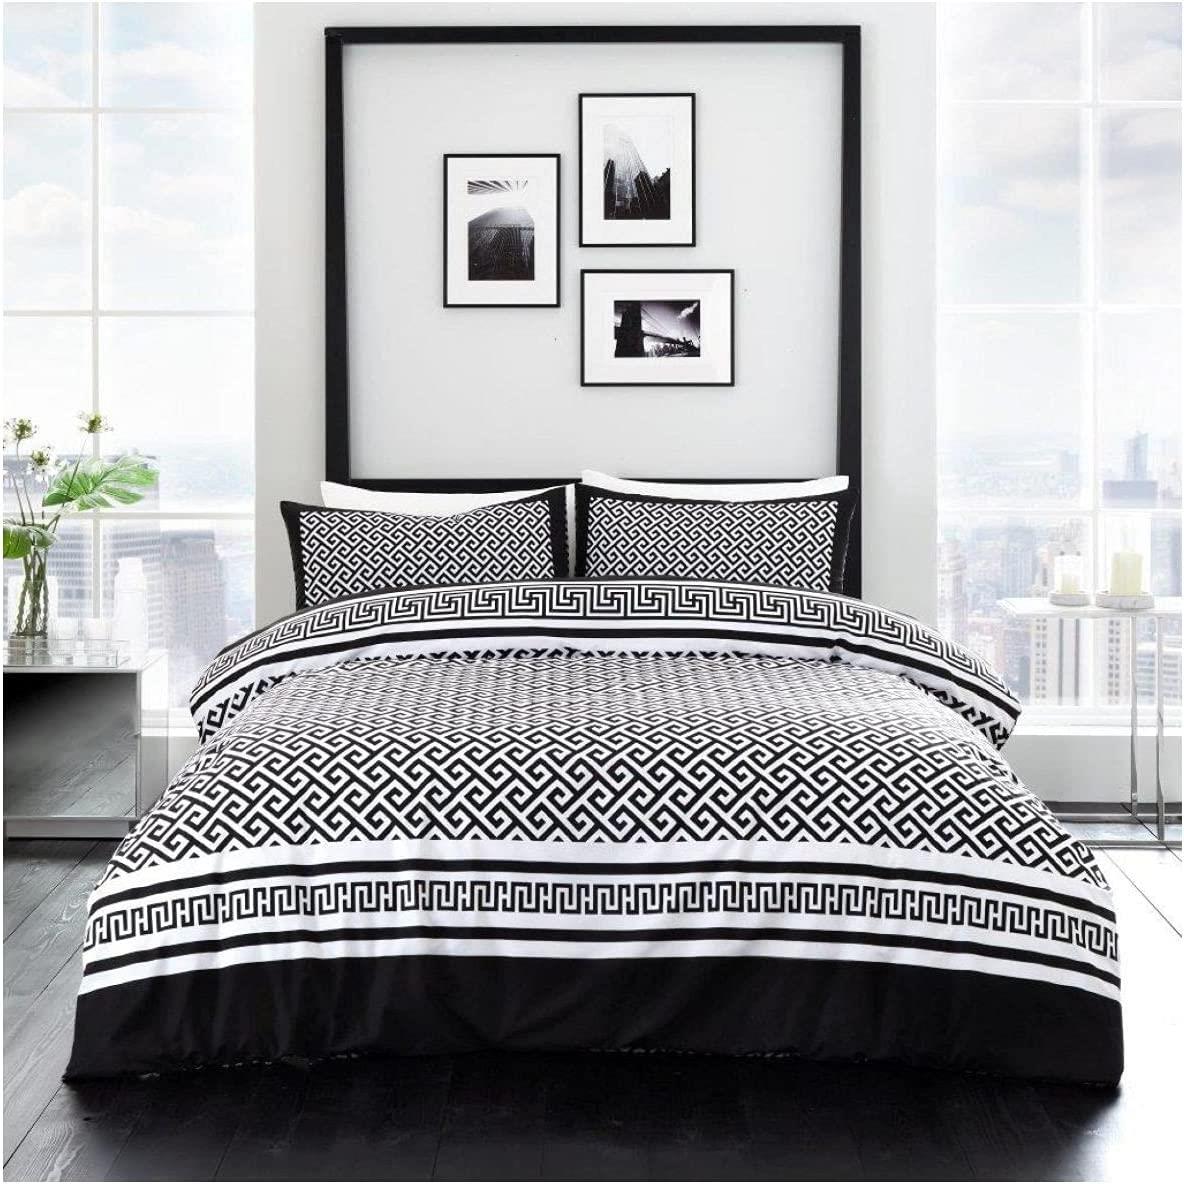 Duvet set black & white geometric retro bedding quilt cover pillow cases bed set